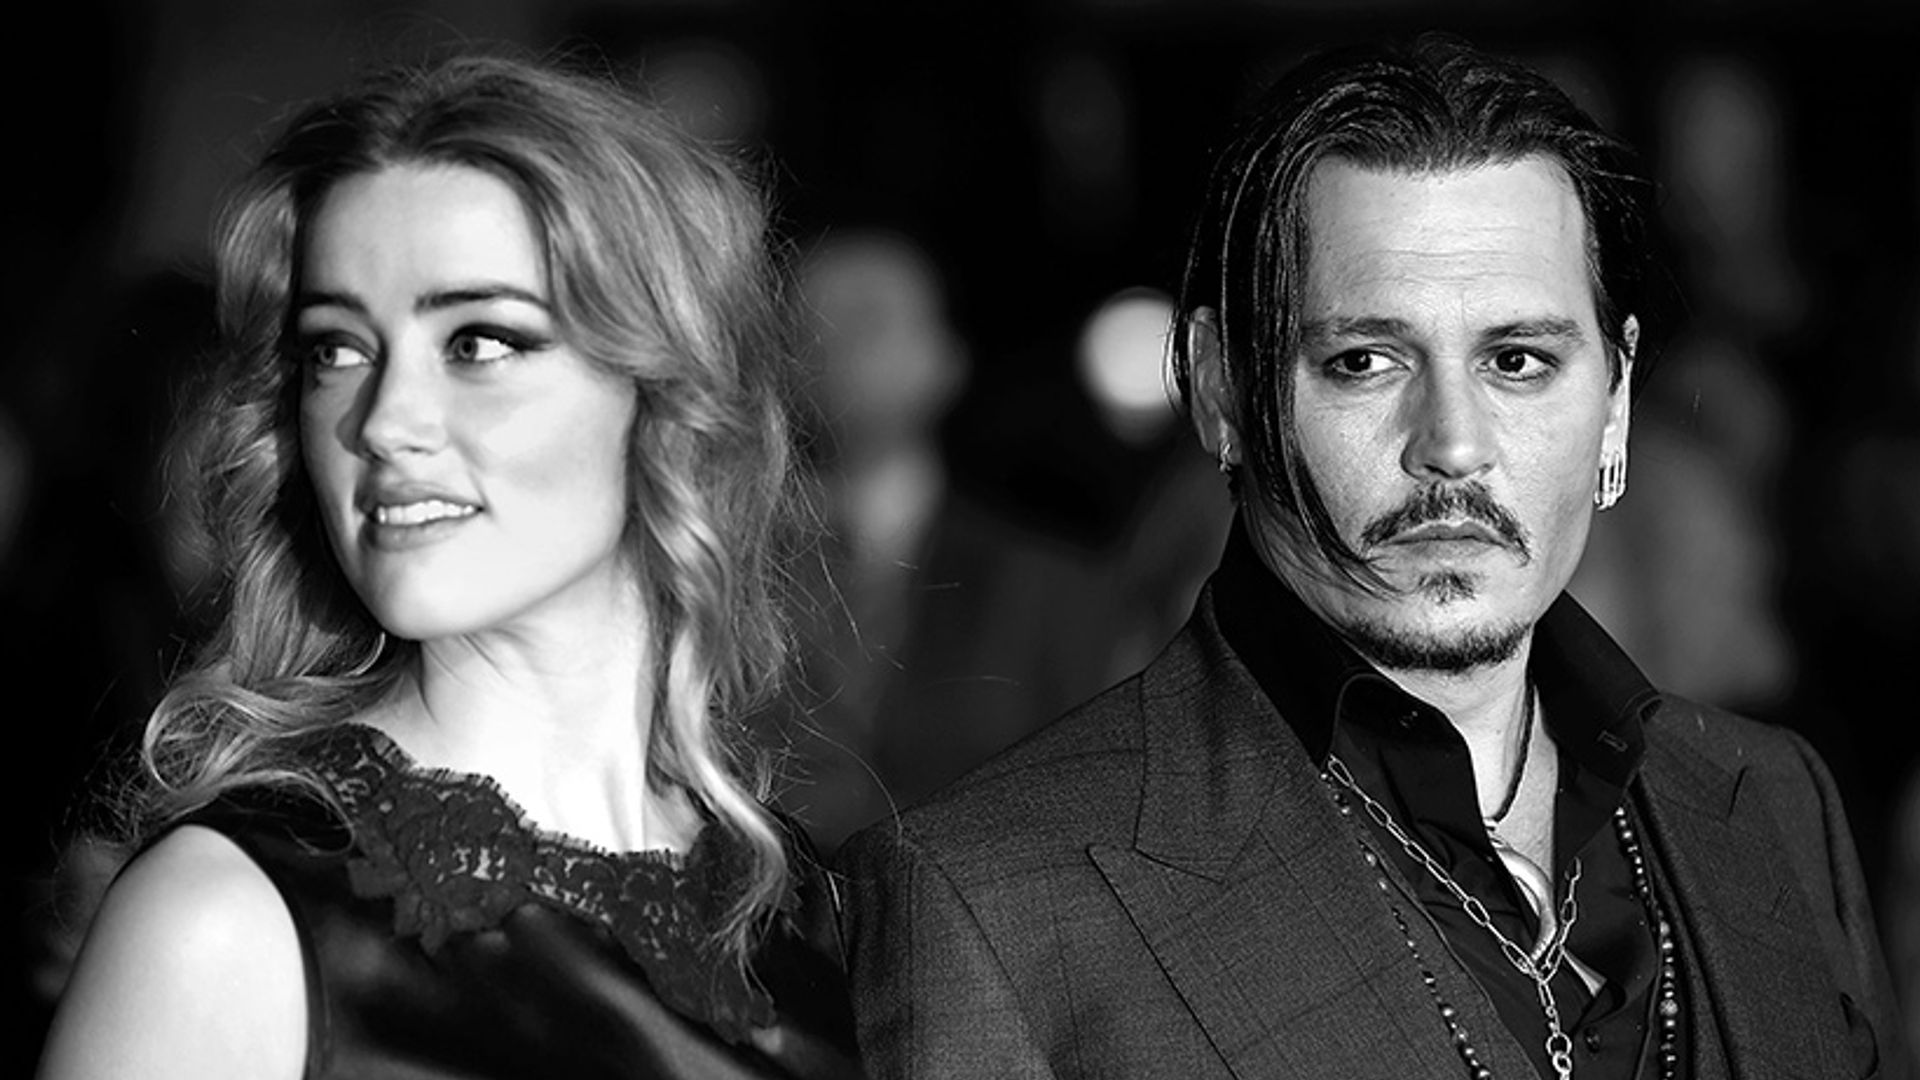 Johnny Depp and Amber Heard's domestic violence hearing postponed